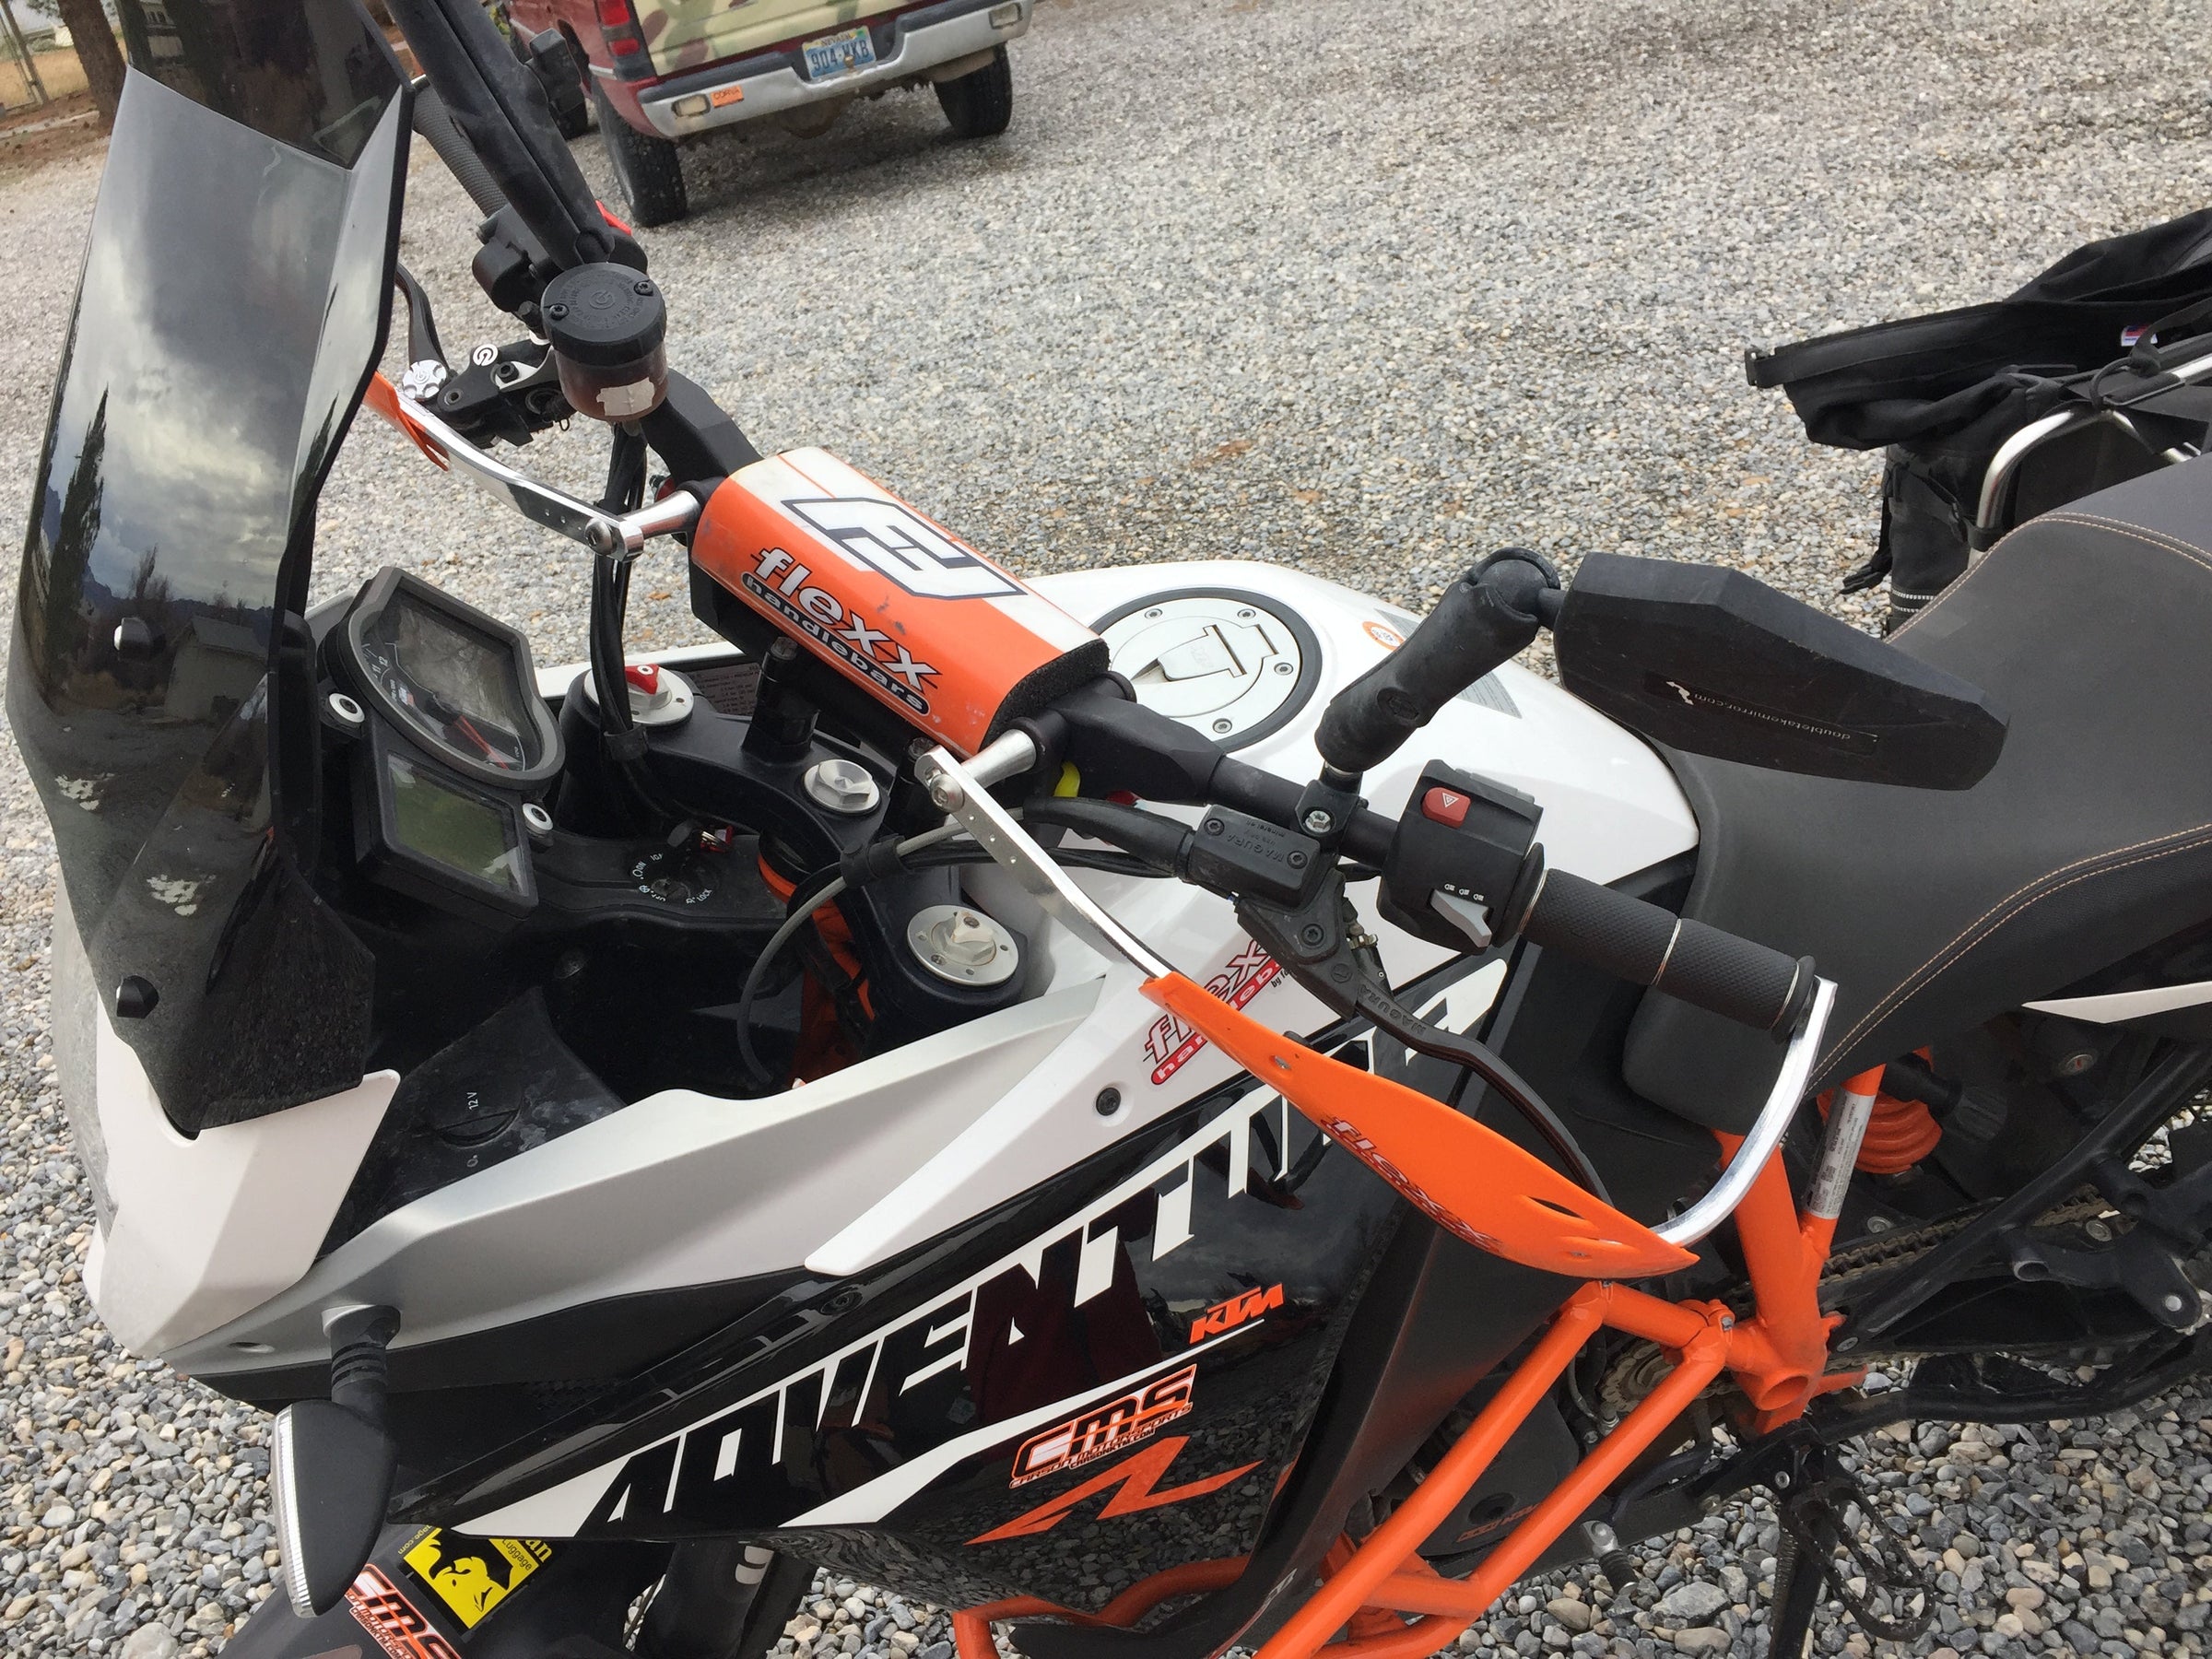 KTM Adventure bike with vibration reducing handlebars